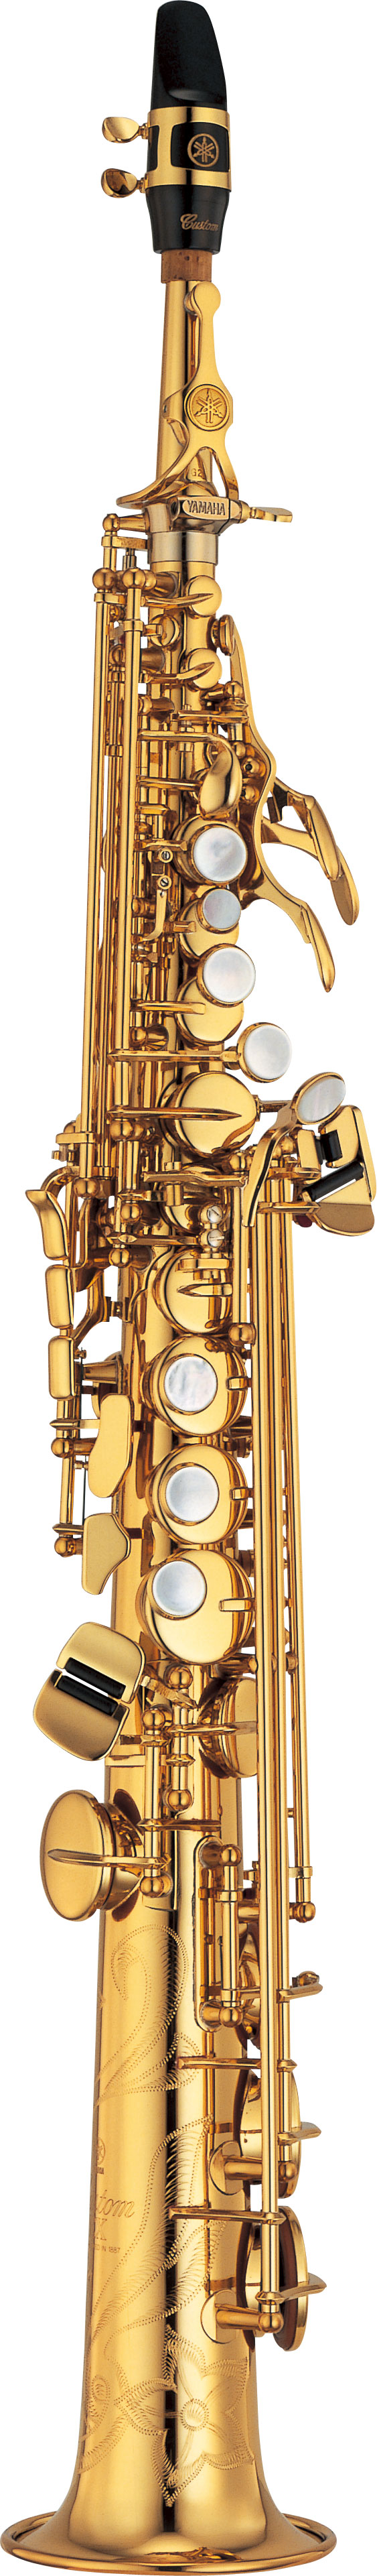 Yamaha YSS-875EX Soprano Sax - Gold Lacquer